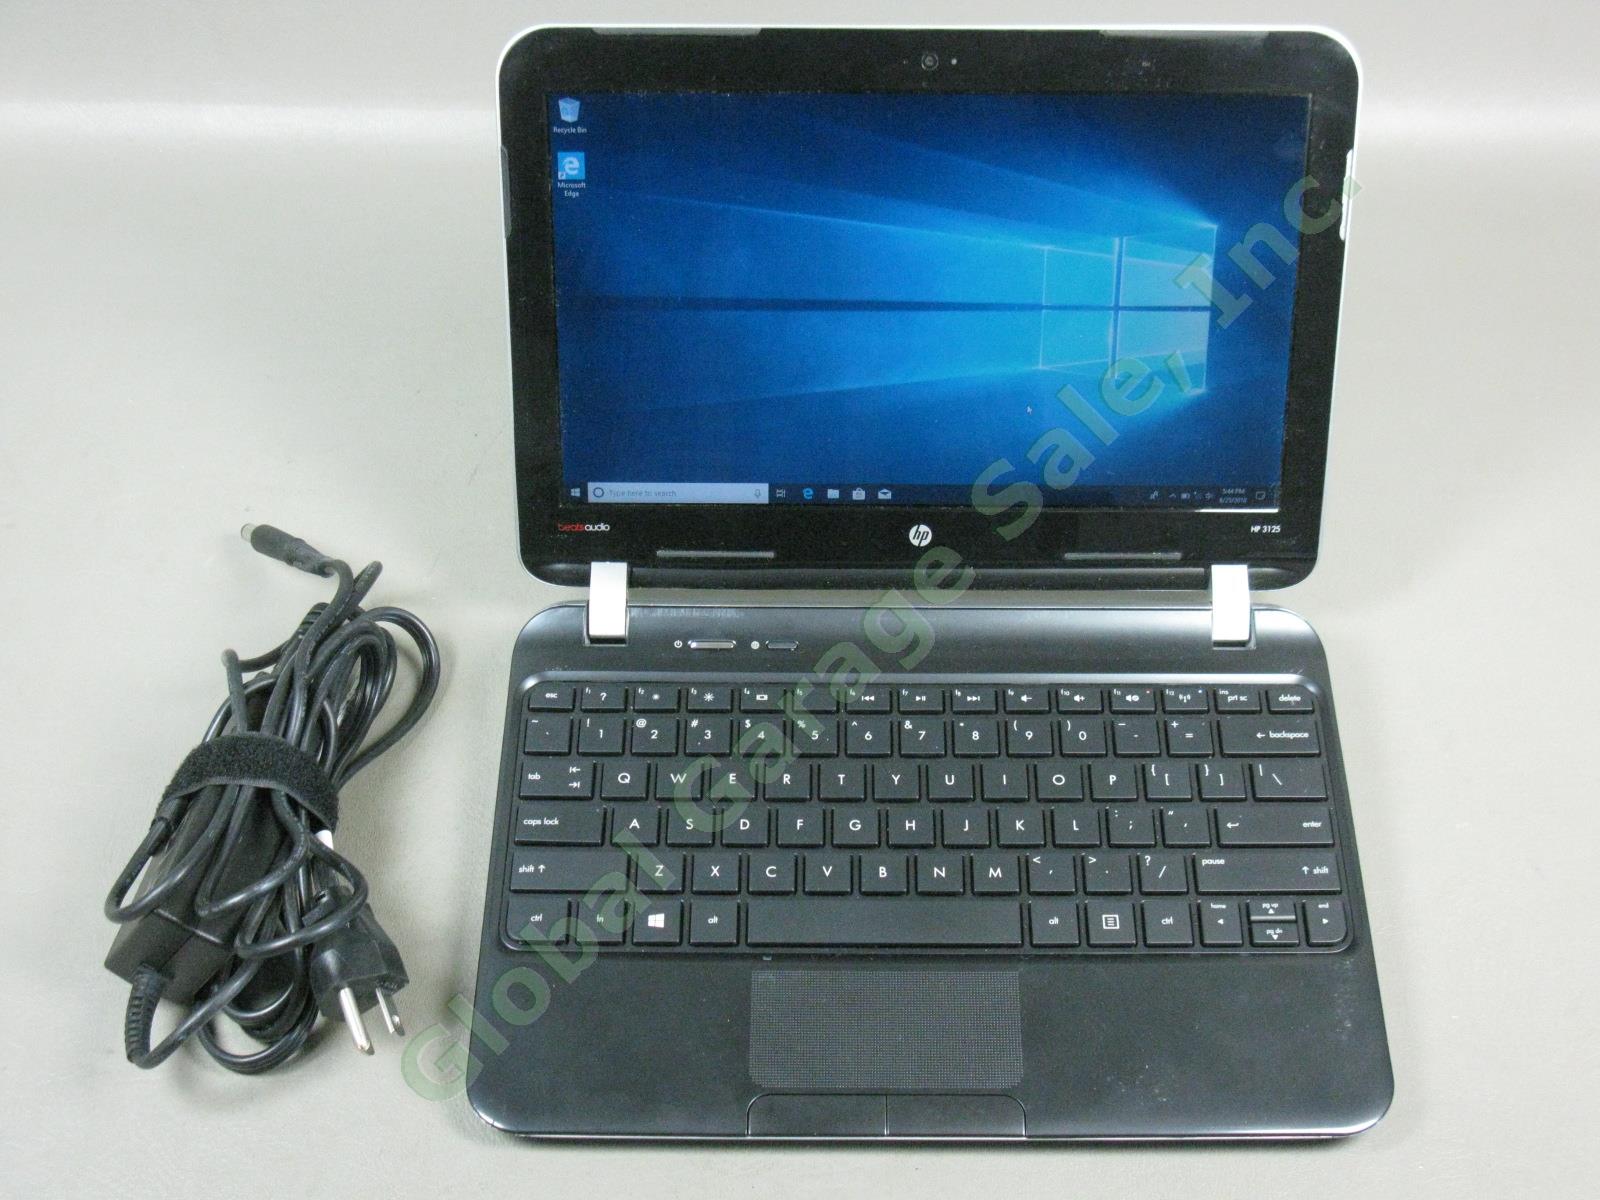 HP 3125 AMD E2-2000 1.75GHz 4GB RAM 320GB HDD Windows 10 Pro 11.6" Laptop